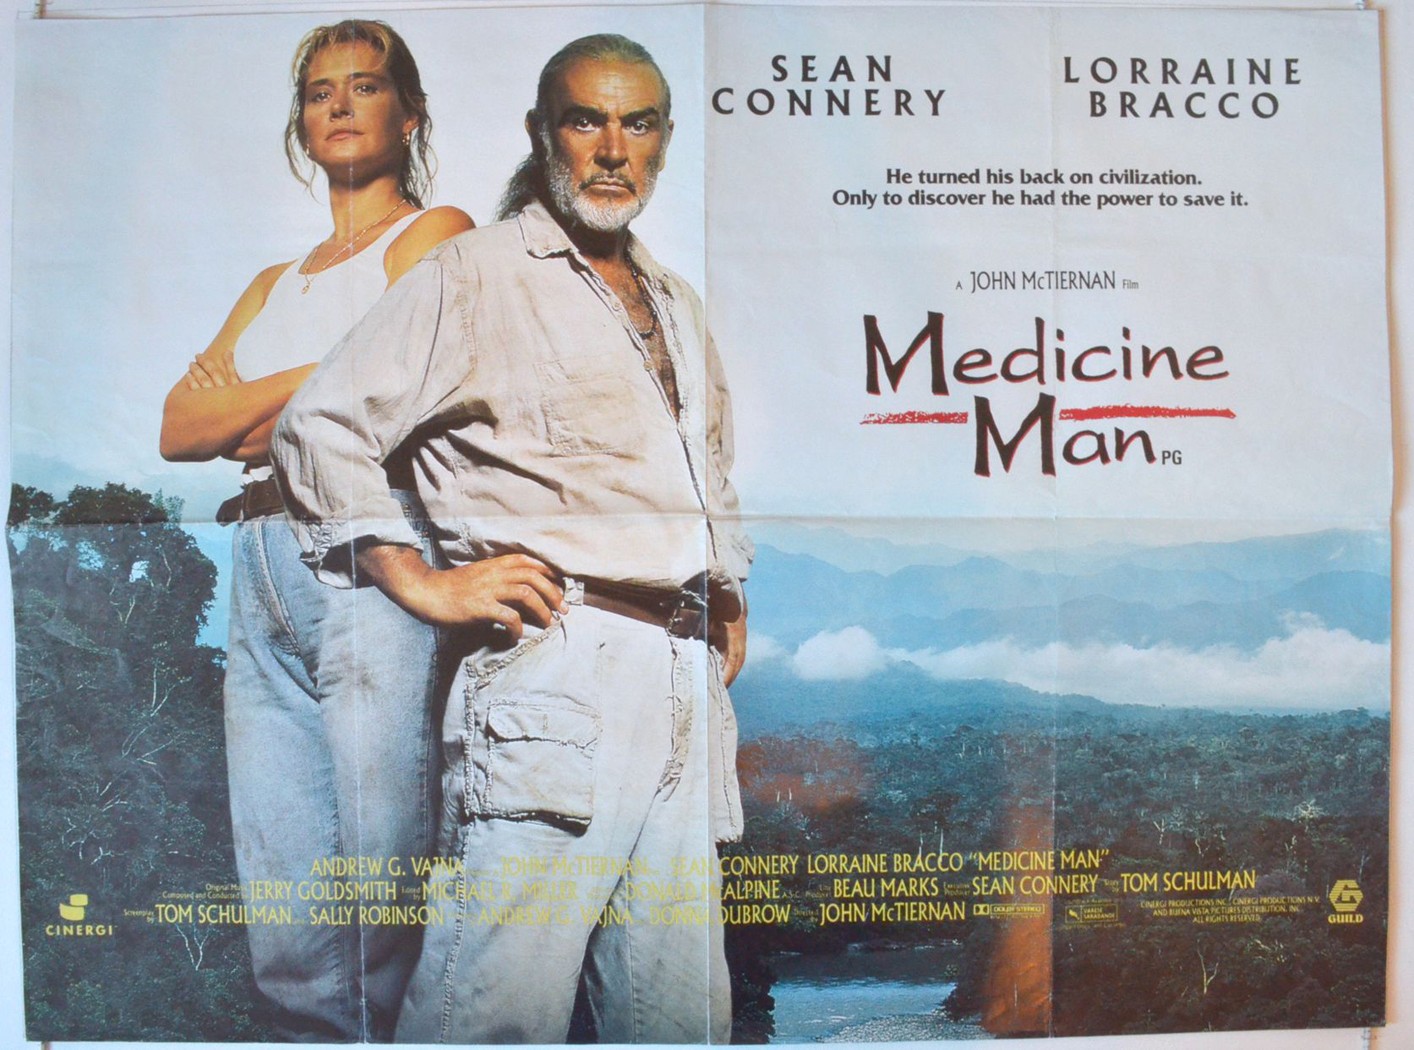 Only to discover. Medicine man 1992. Medicine man 1992 fonts.